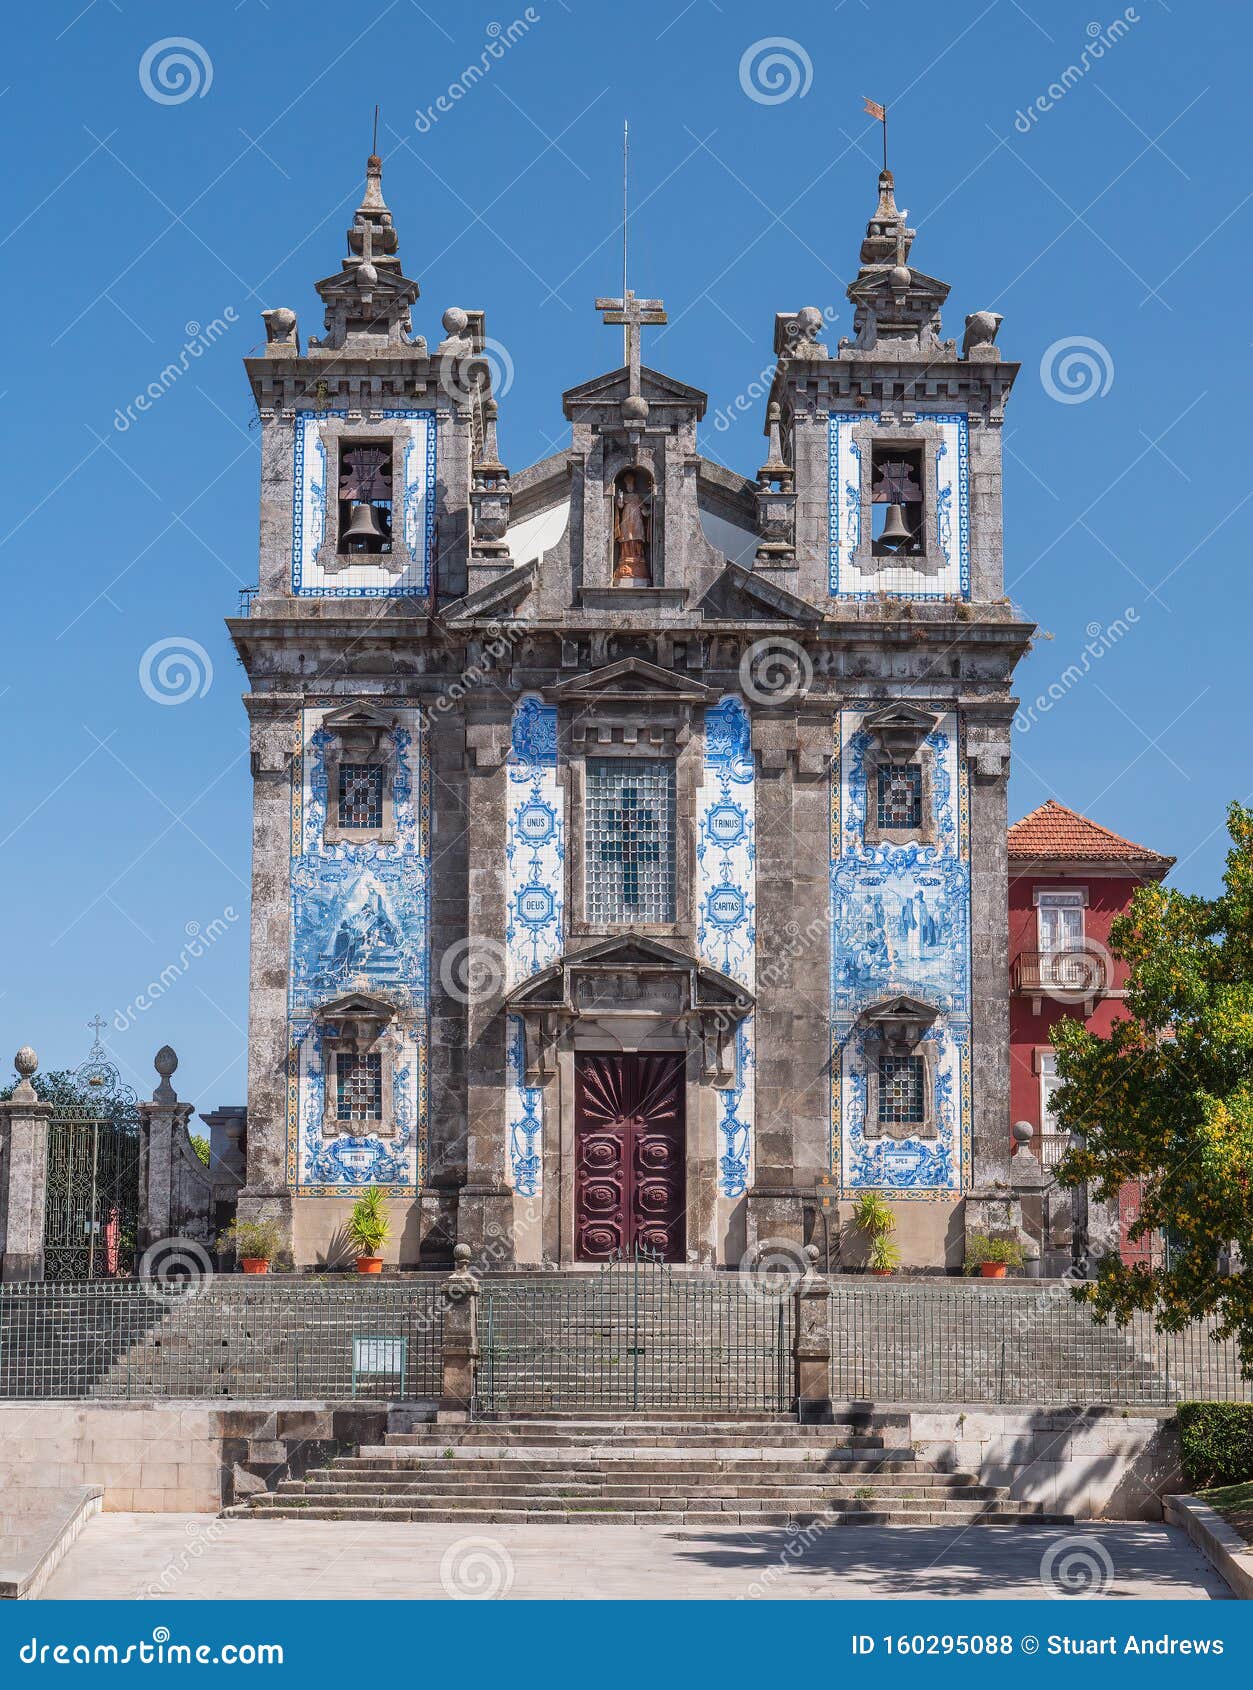 igreja de santo ildefonso, porto, portugal.